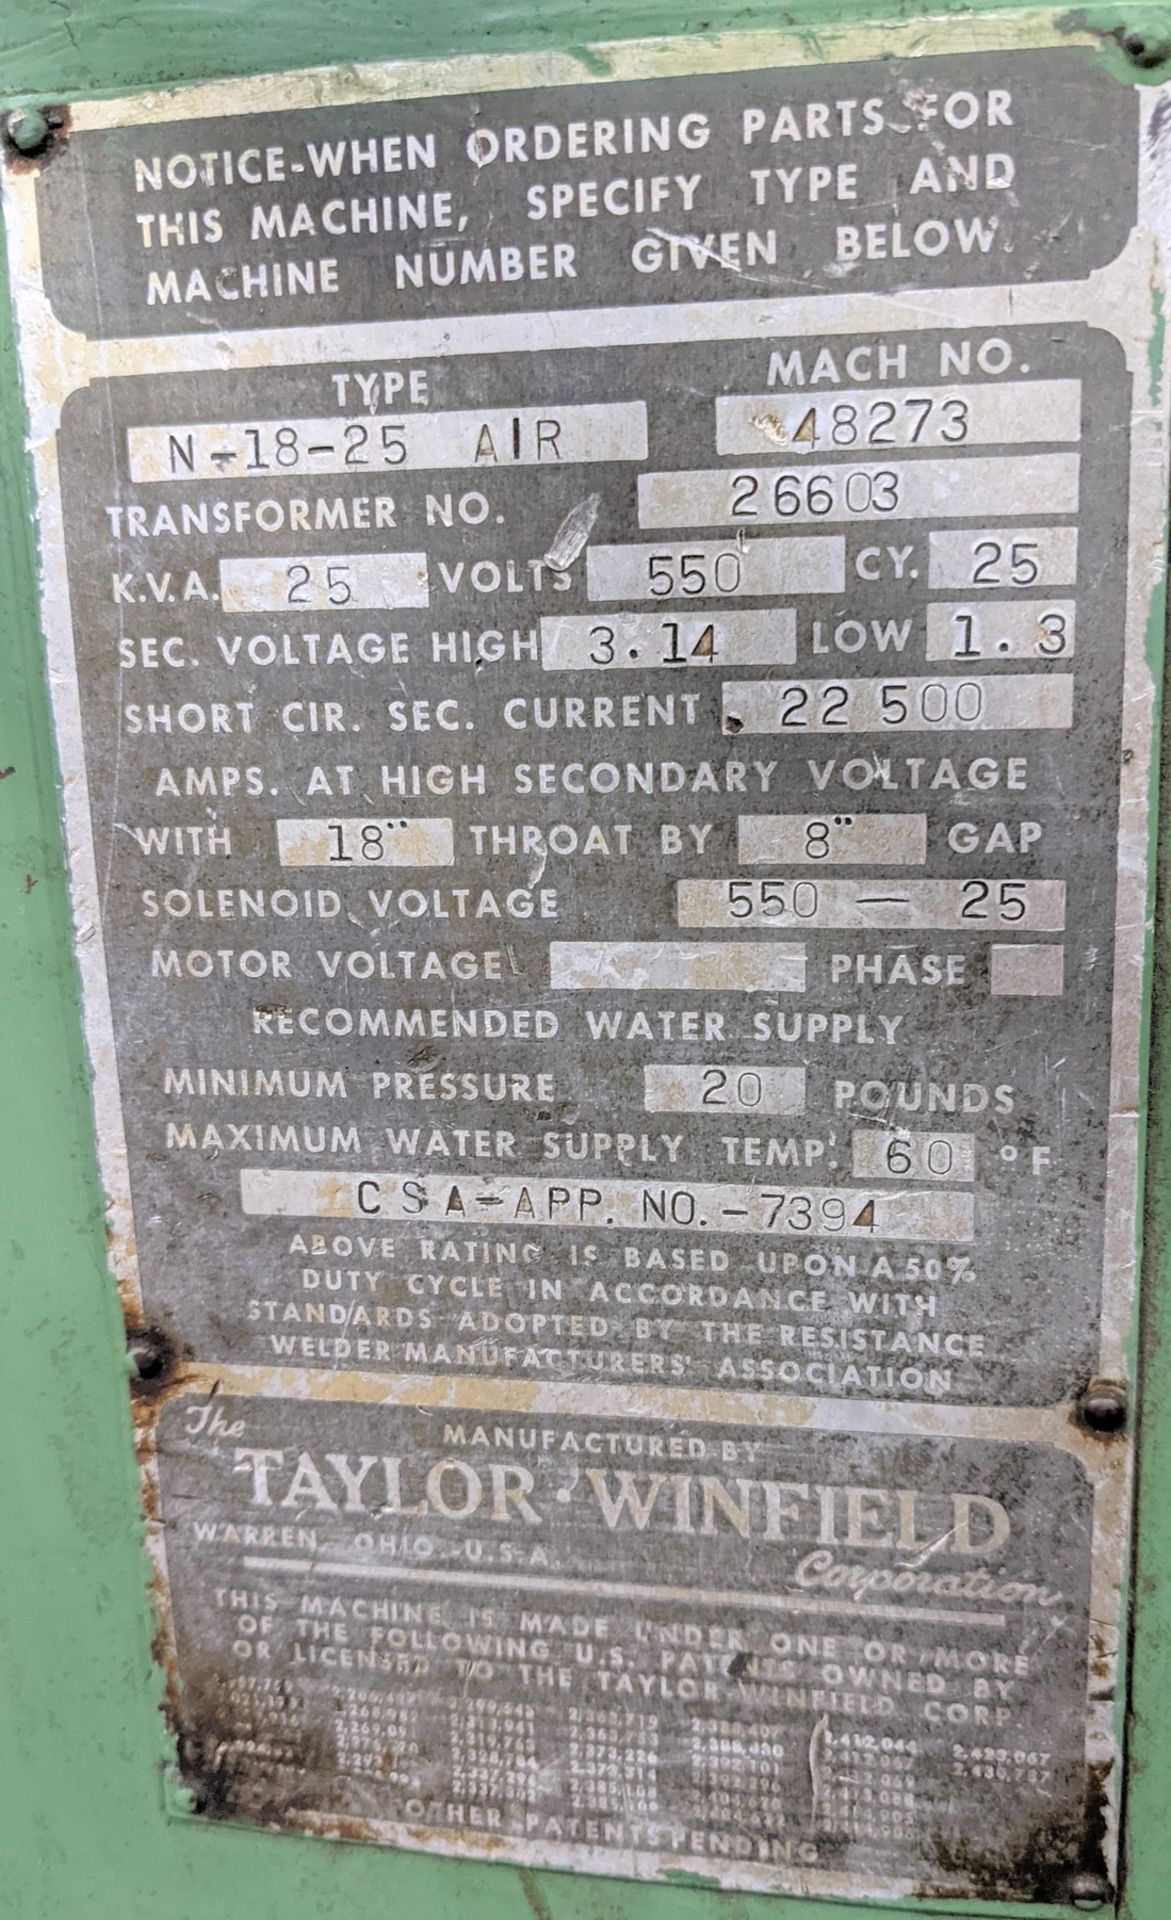 TAYLOR WINFIELD N-18-25 AIR SPOT WELDER, 25KVA, 18" THROAT, 8" GAP, S/N 48273, 550V, MEDAR CONTROL - Image 4 of 6